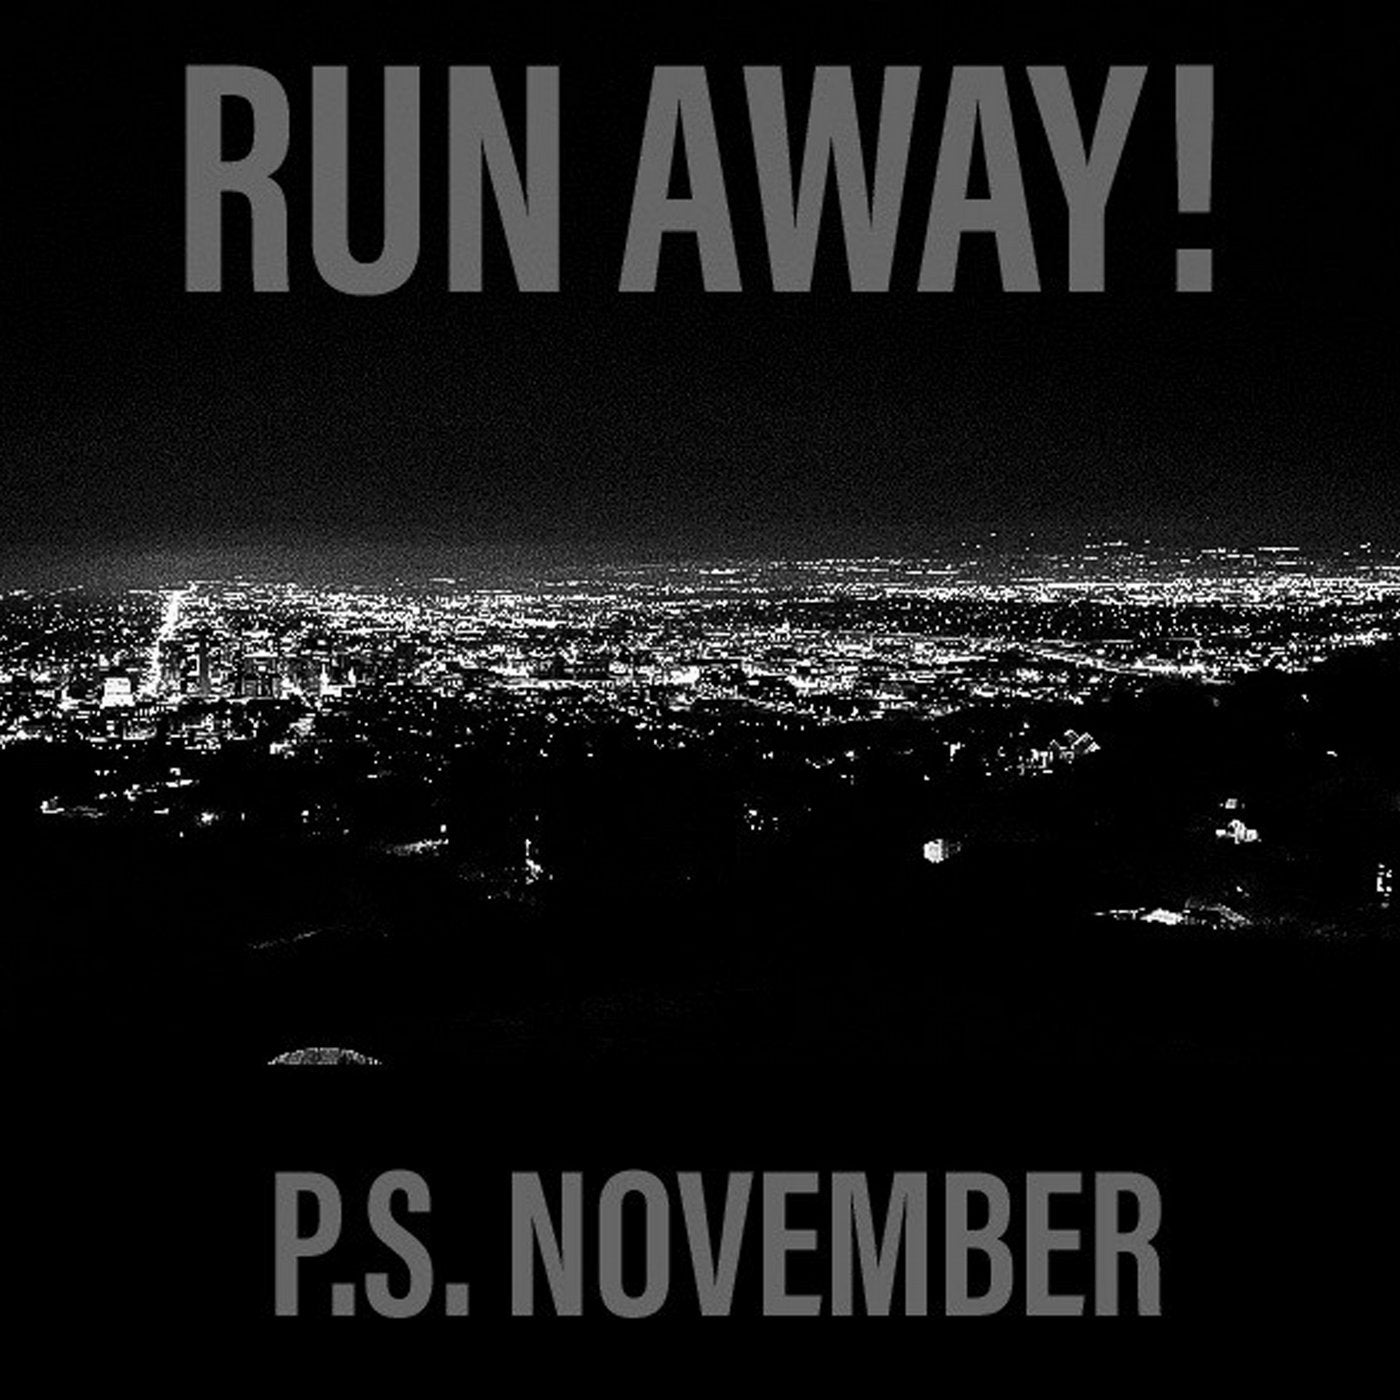 Away p. November песня.